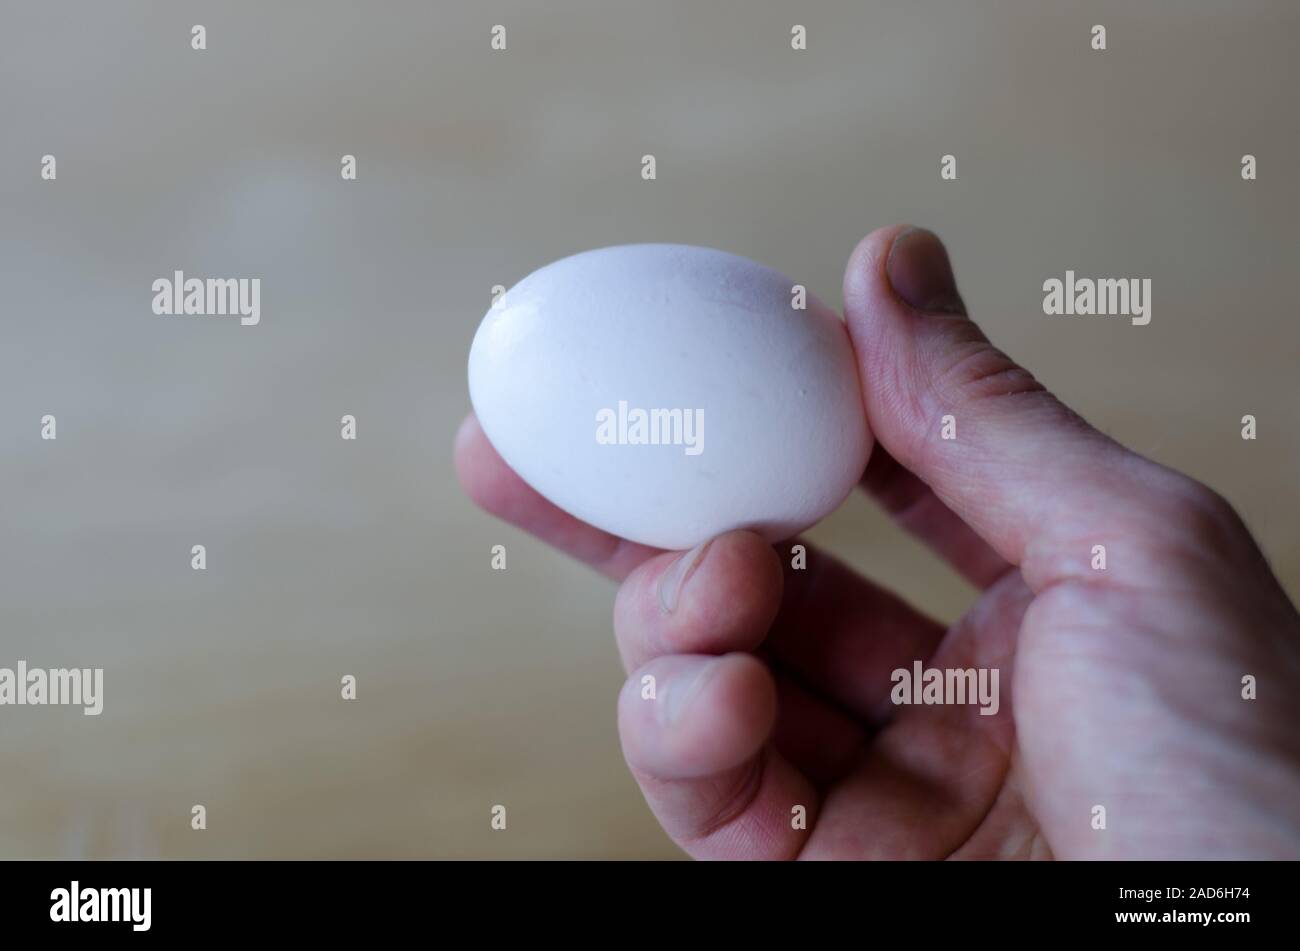 White organic egg hold by caucasian hand Stock Photo